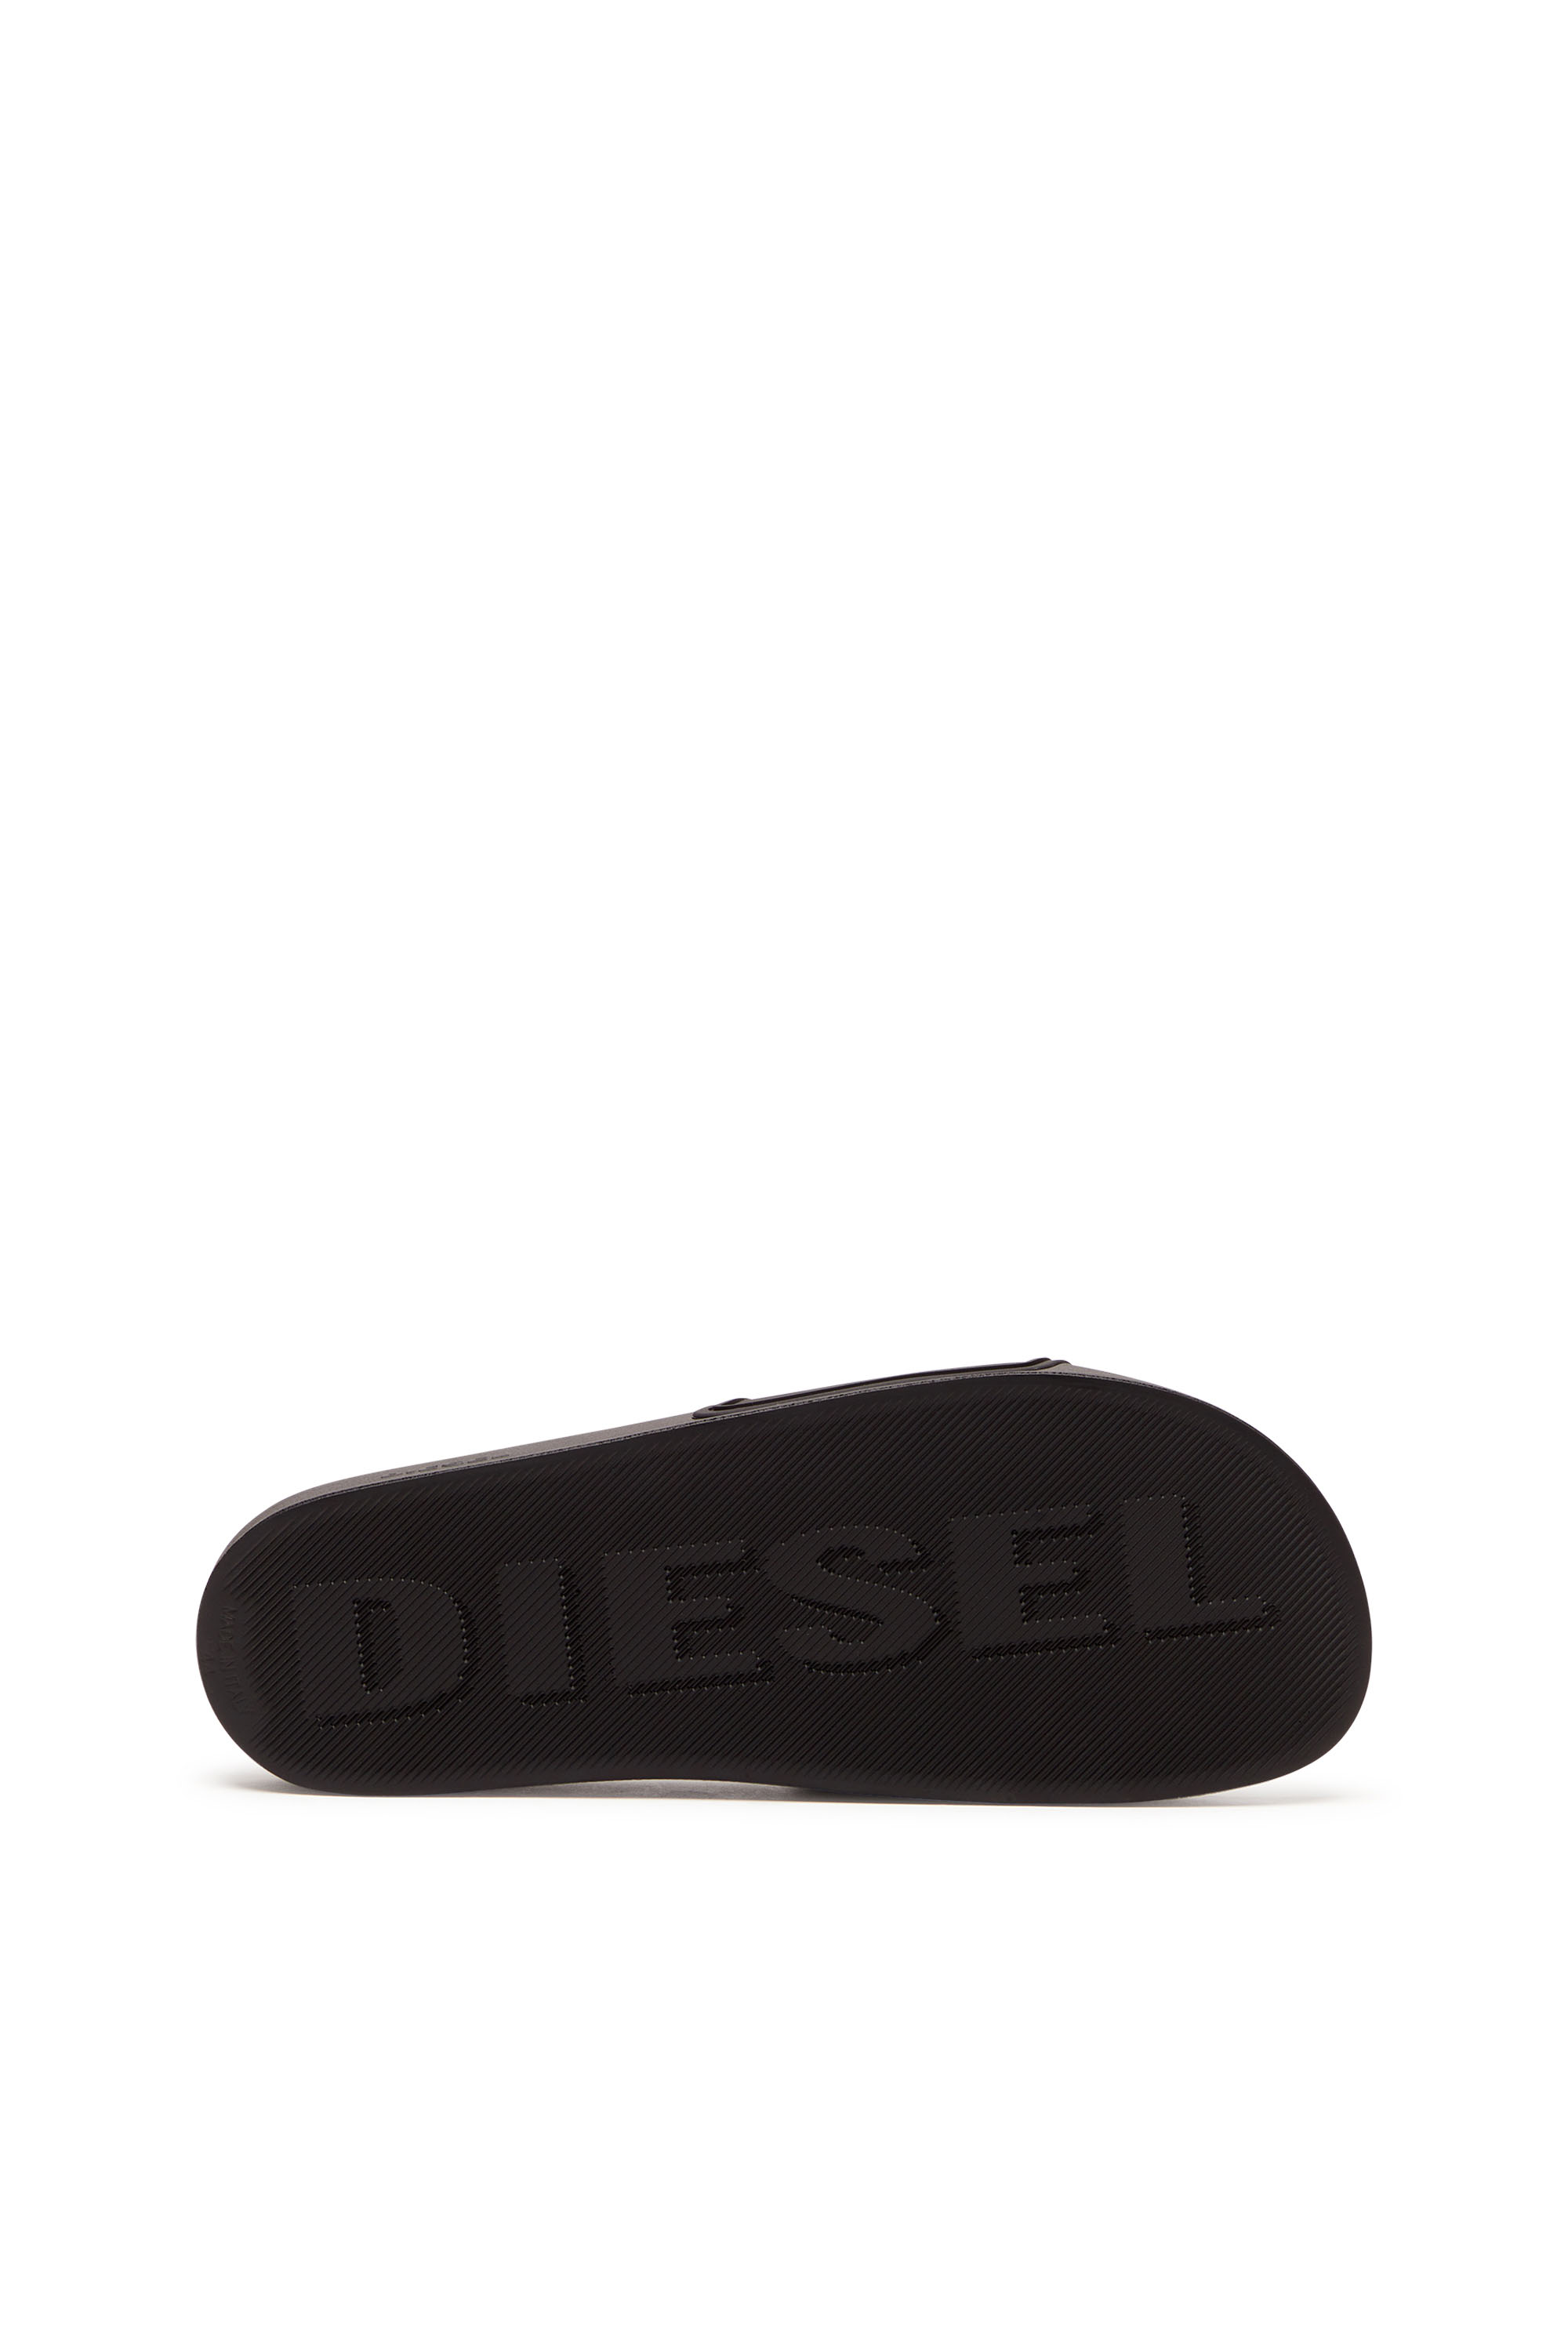 Diesel - SA-MAYEMI CC, Male サンダル ロゴ - Sa-Mayemi CC in ブラック - Image 4